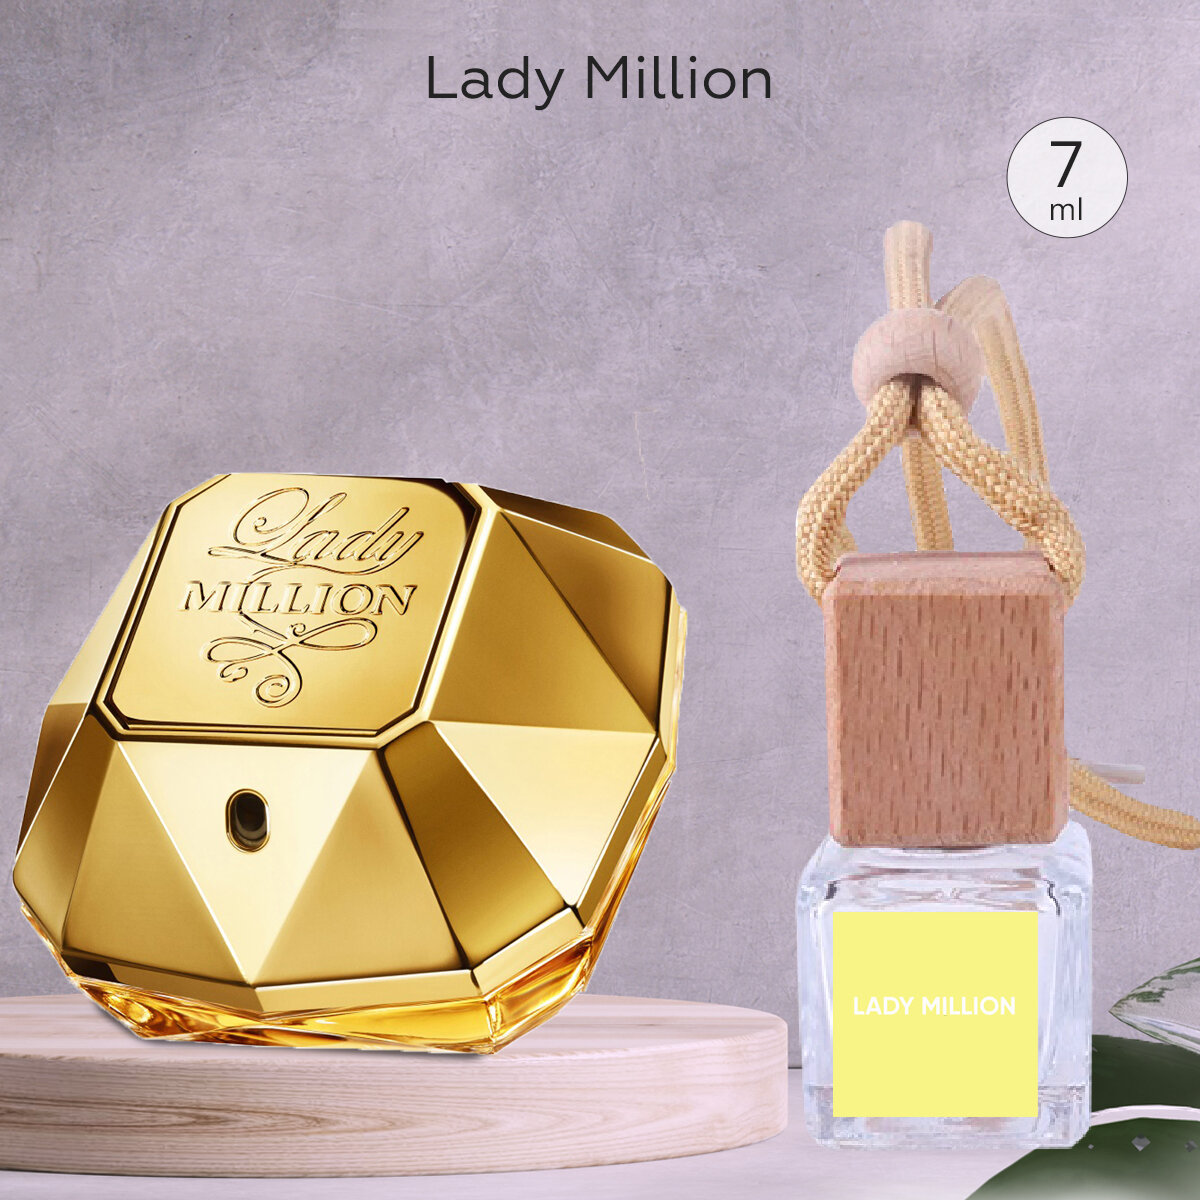 Gratus Parfum Lady Million Автопарфюм 7 мл / Ароматизатор для автомобиля и дома